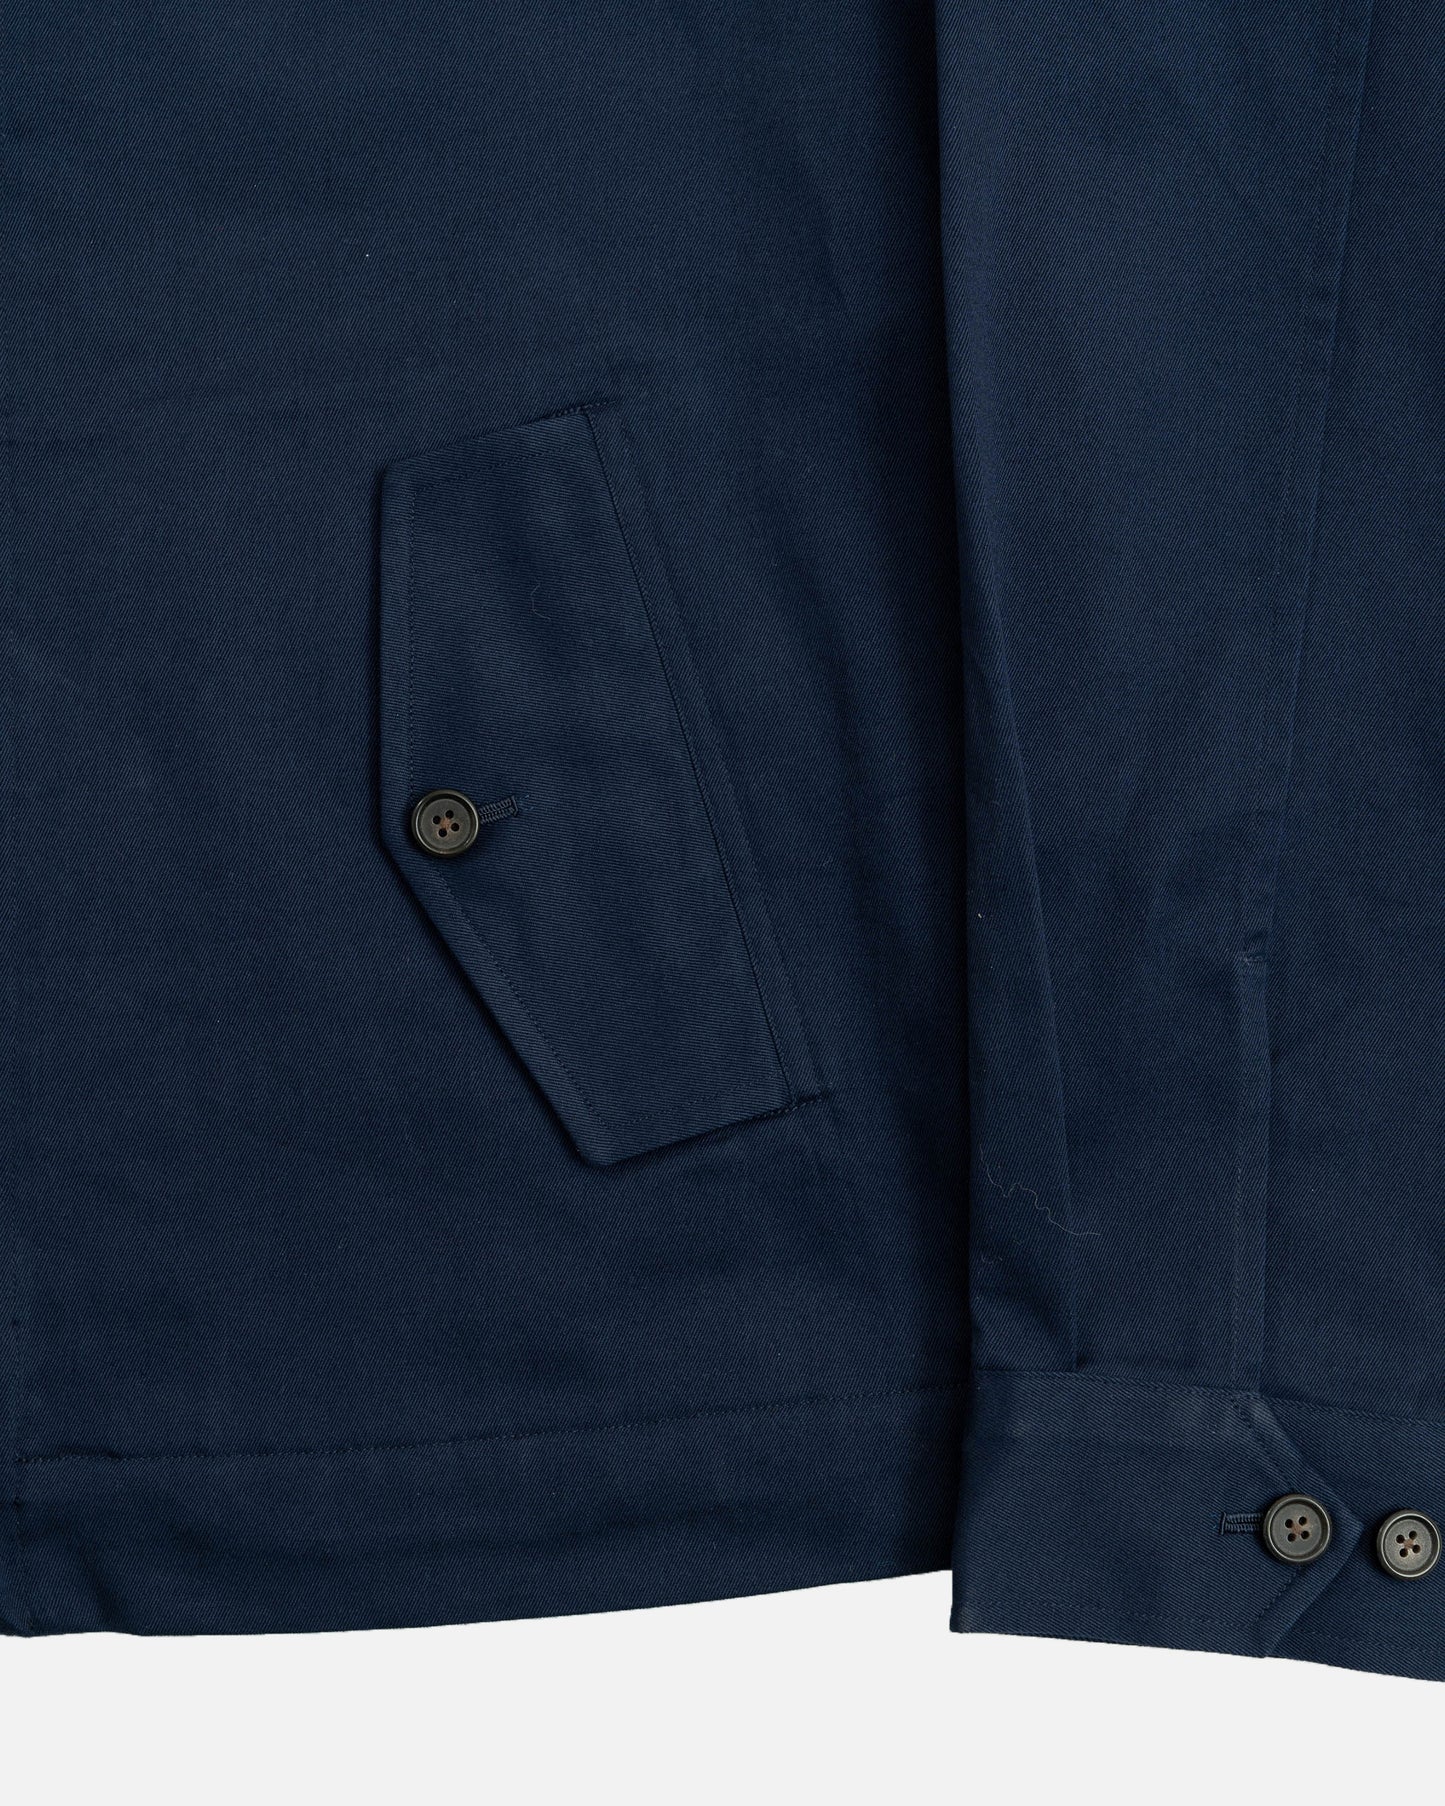 Ascot Chang Navy Cotton Raglan Jacket